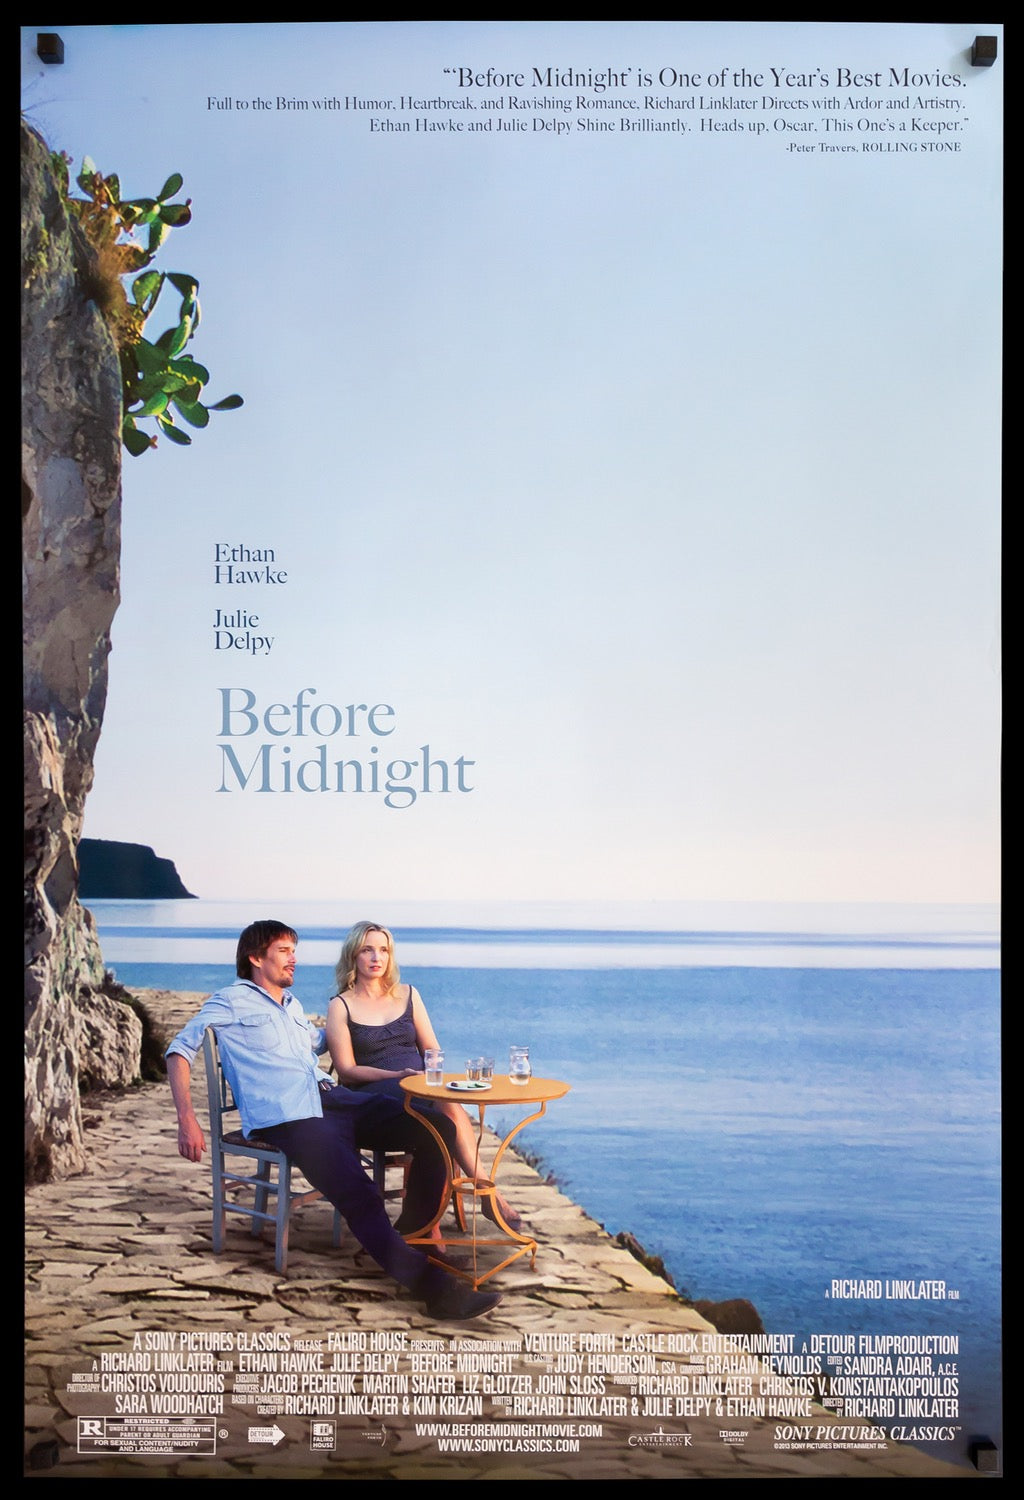 Before Midnight (2013) original movie poster for sale at Original Film Art